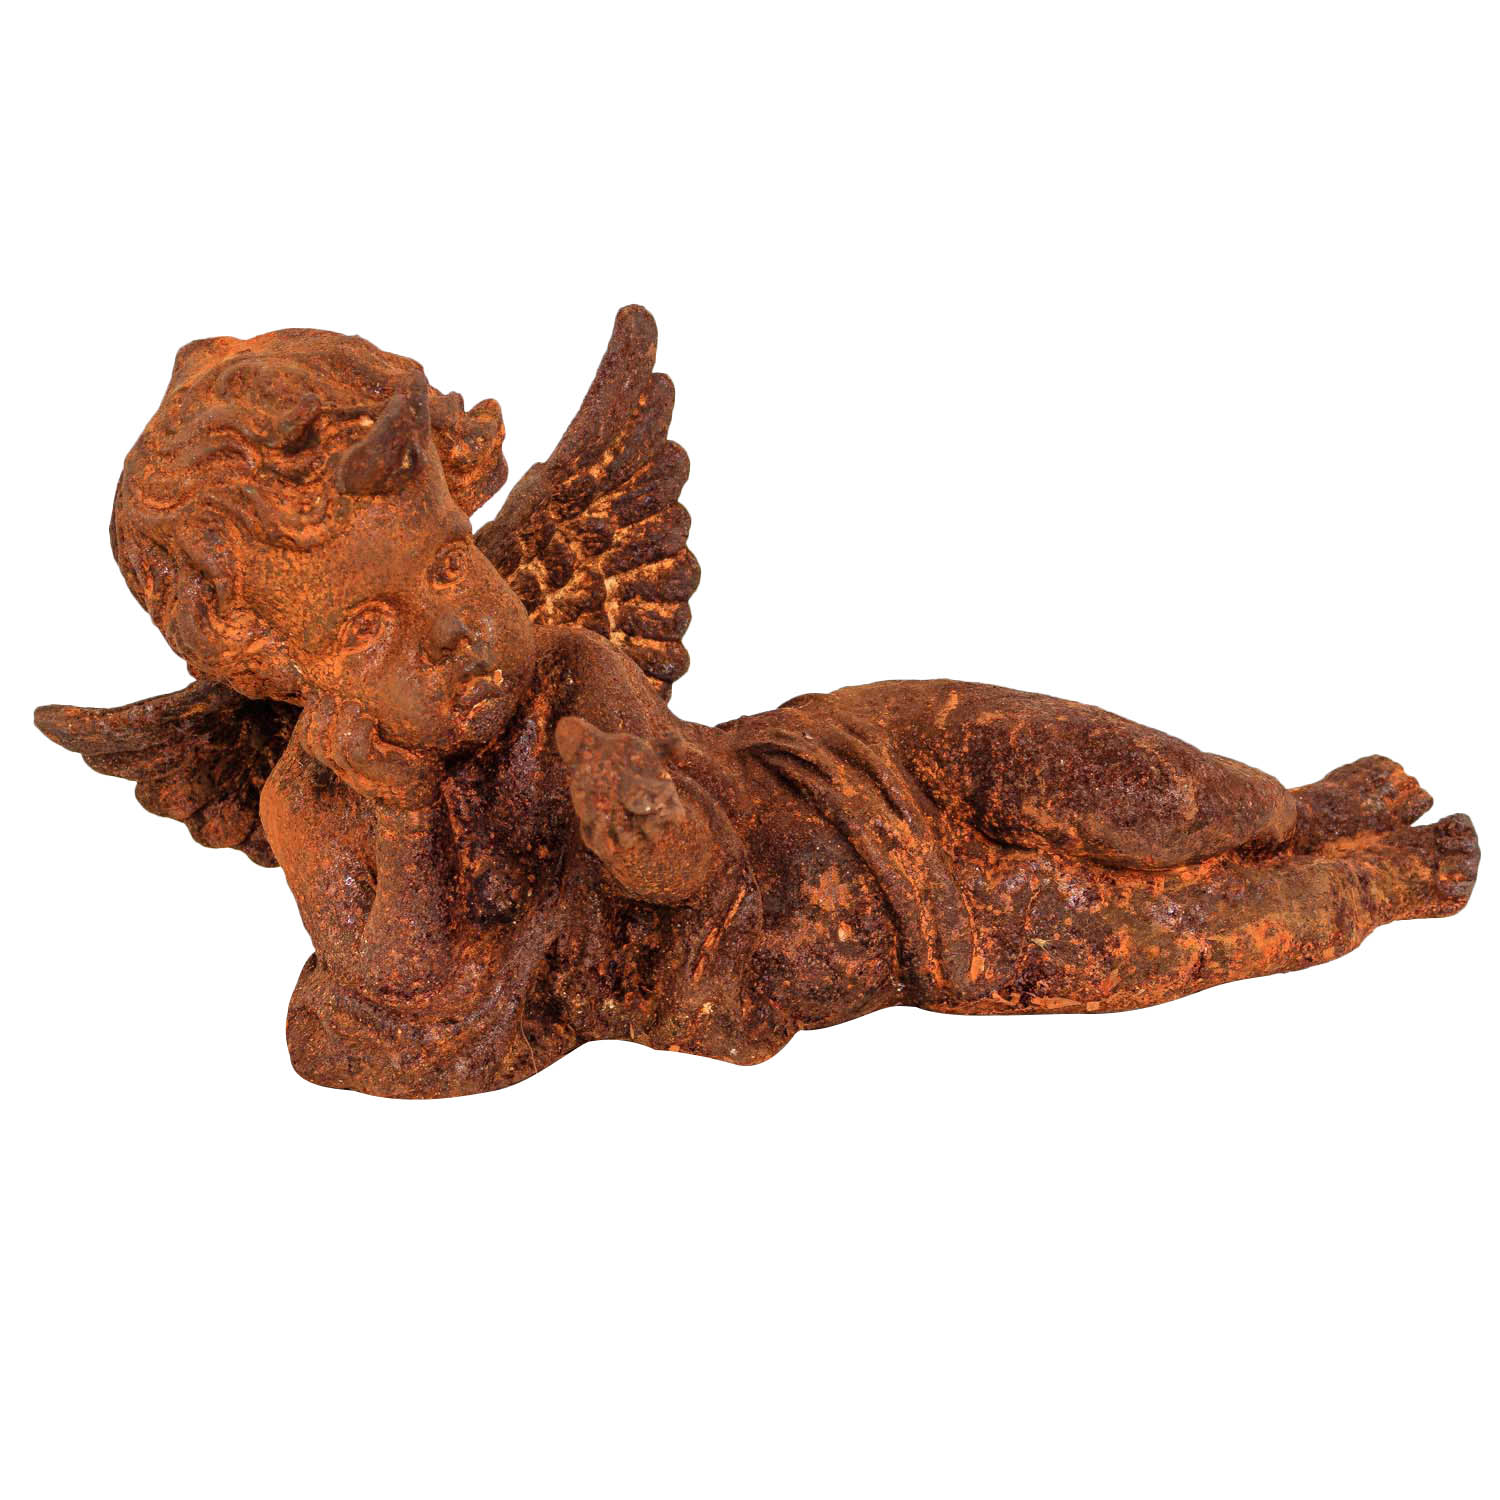 Engel Rost Luxus Garden Sculpture Angel Religious Statue Garden Iron Rust Antique Style